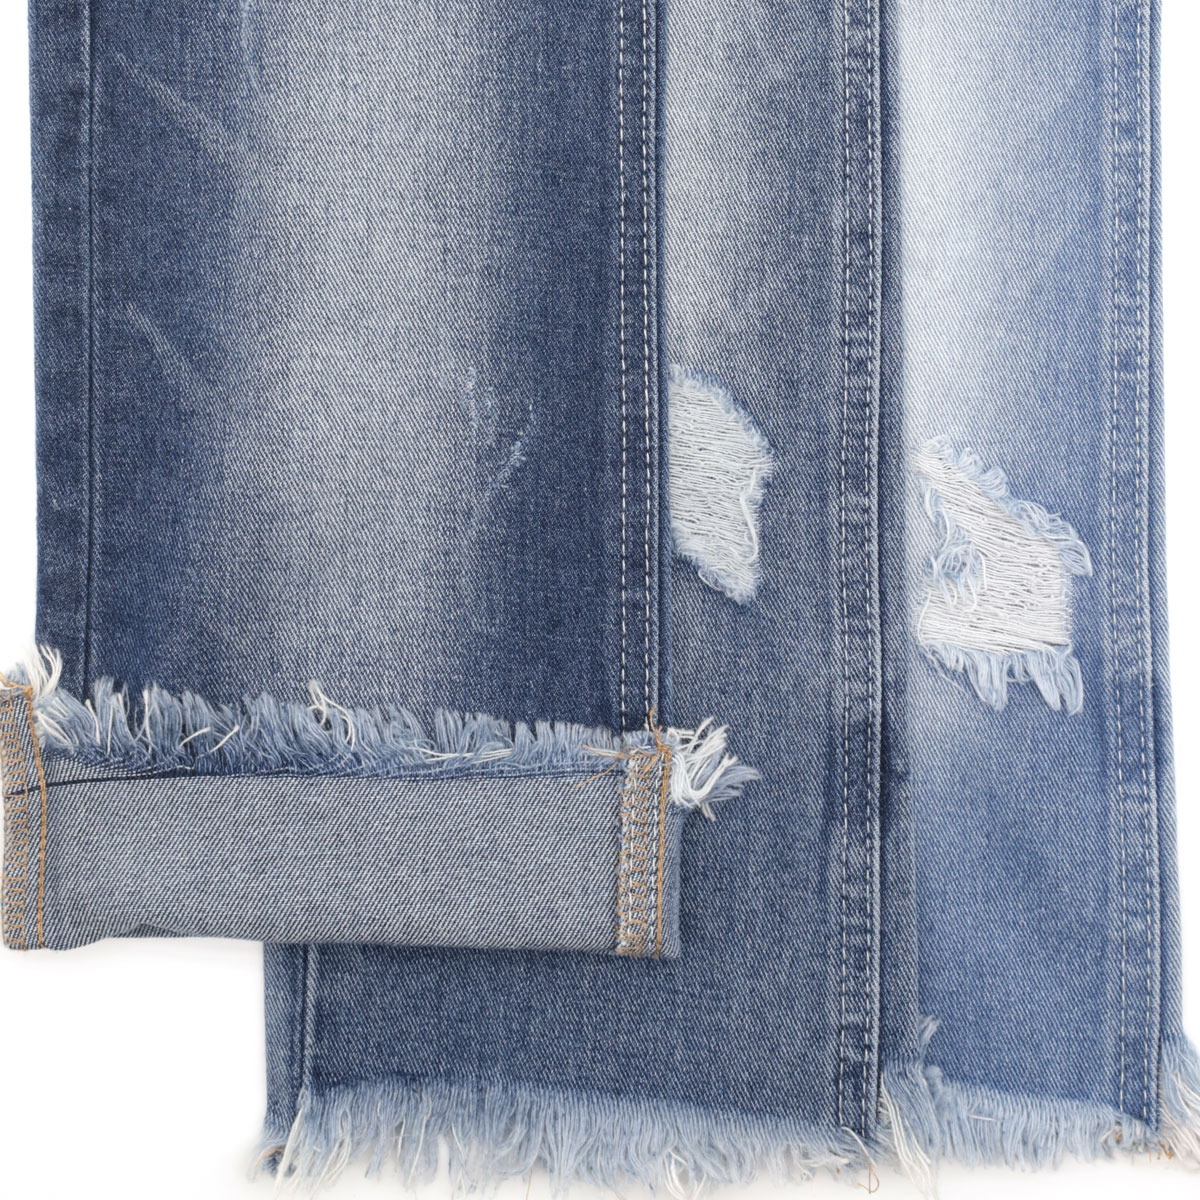 How to Make a Handmade Denim Jeans Material 1